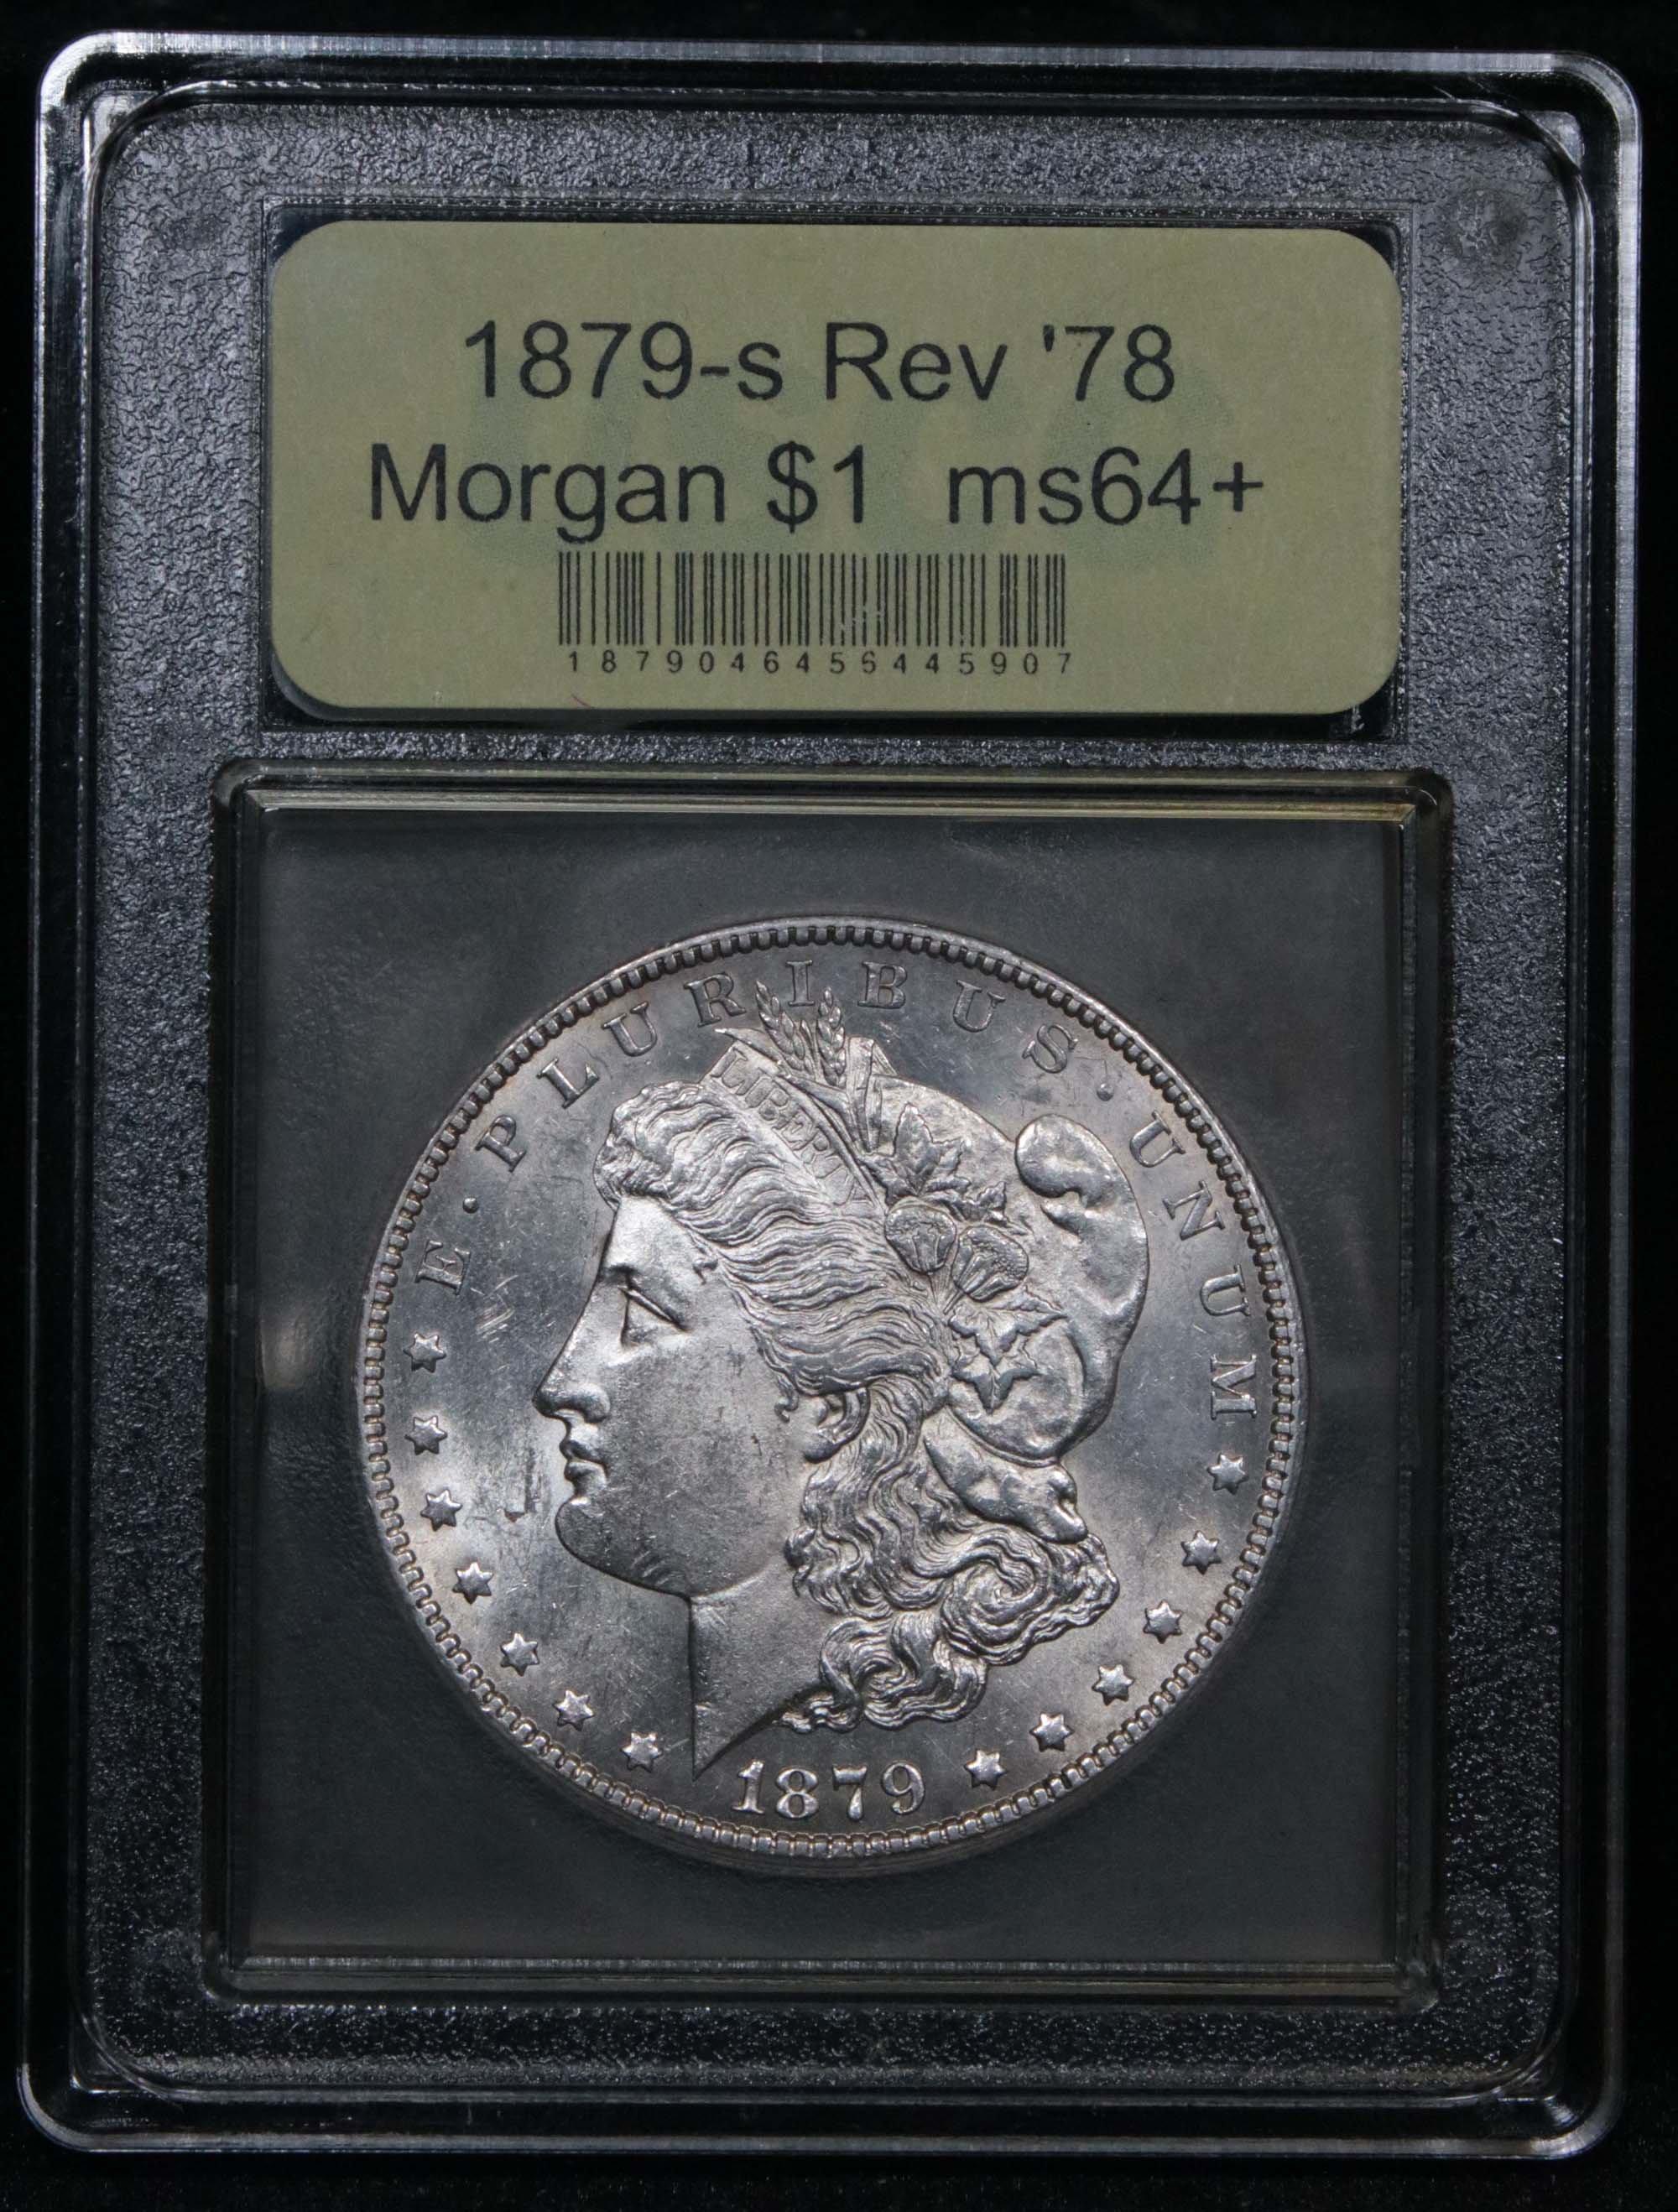 ***Auction Highlight*** ultra rare Top 100 1879-s Rev '78 Morgan Dollar $1 Grades Choice+ Unc (fc)